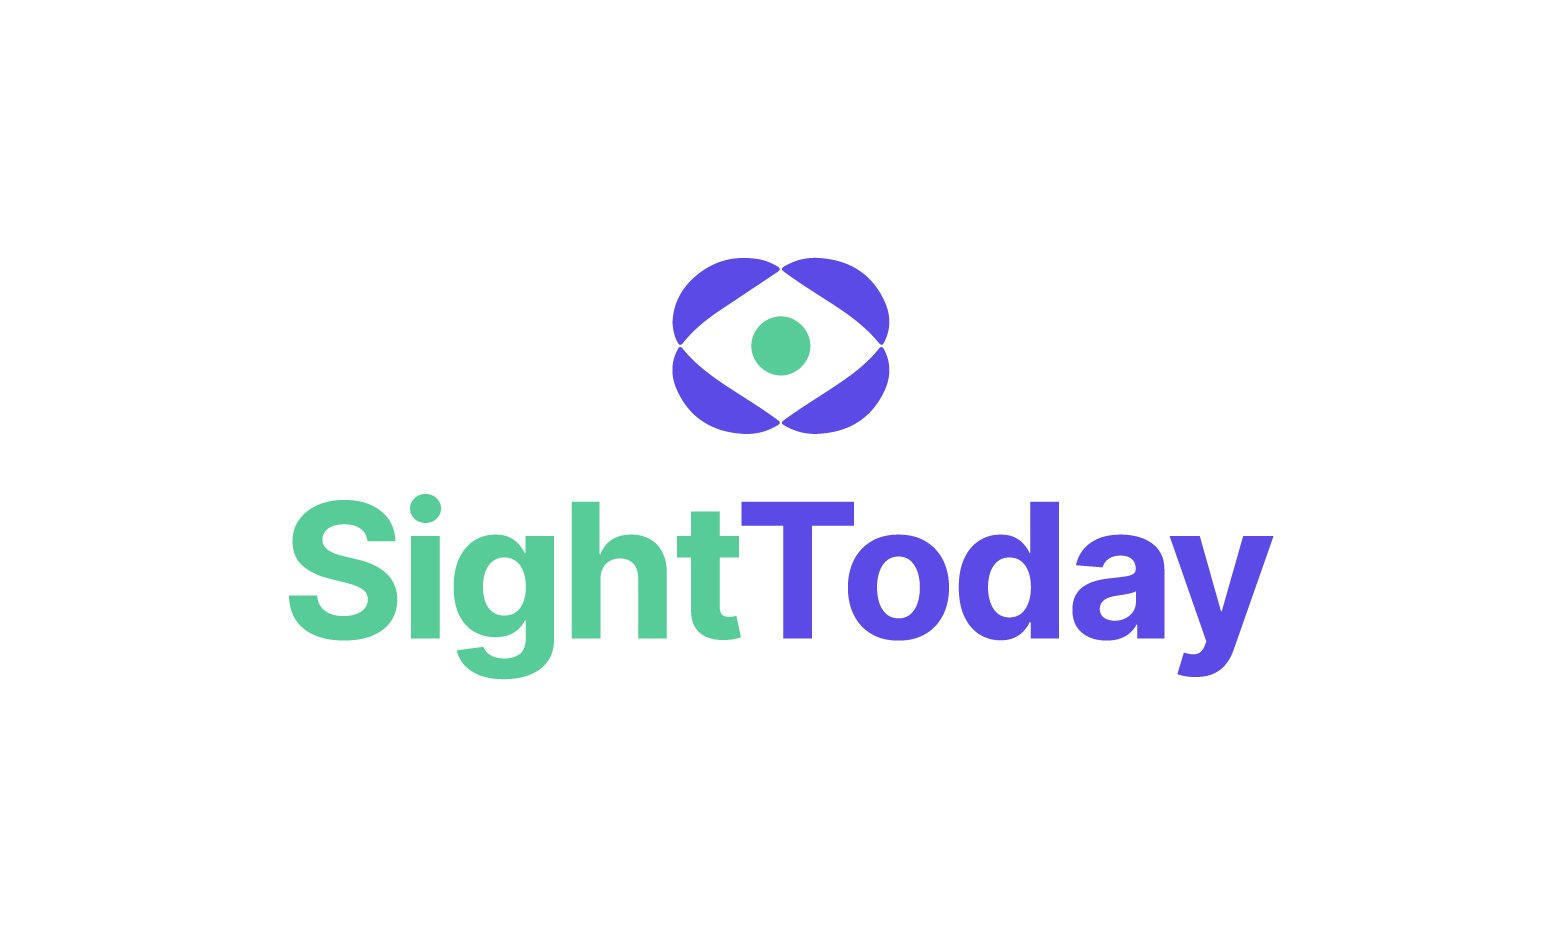 SightToday.com - Creative brandable domain for sale